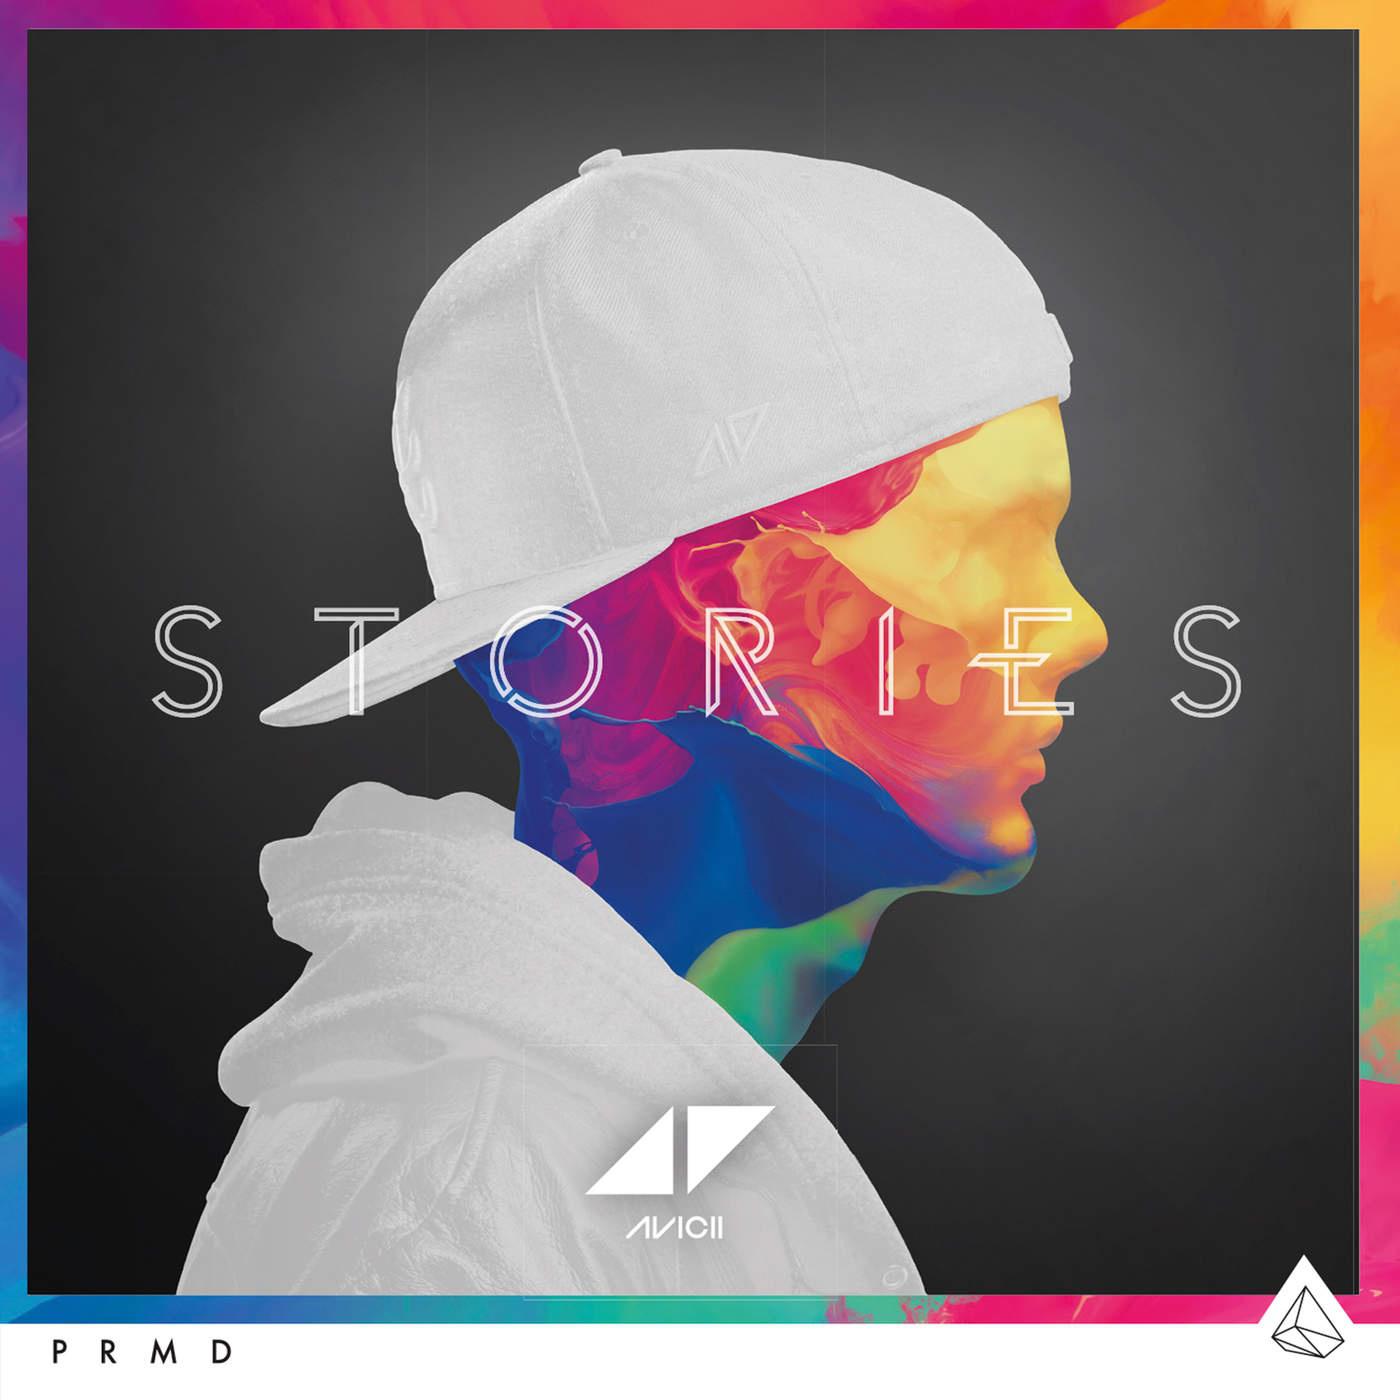 Somewhere In Stockholm歌词 歌手Avicii / Daniel Adams-Ray-专辑Stories-单曲《Somewhere In Stockholm》LRC歌词下载